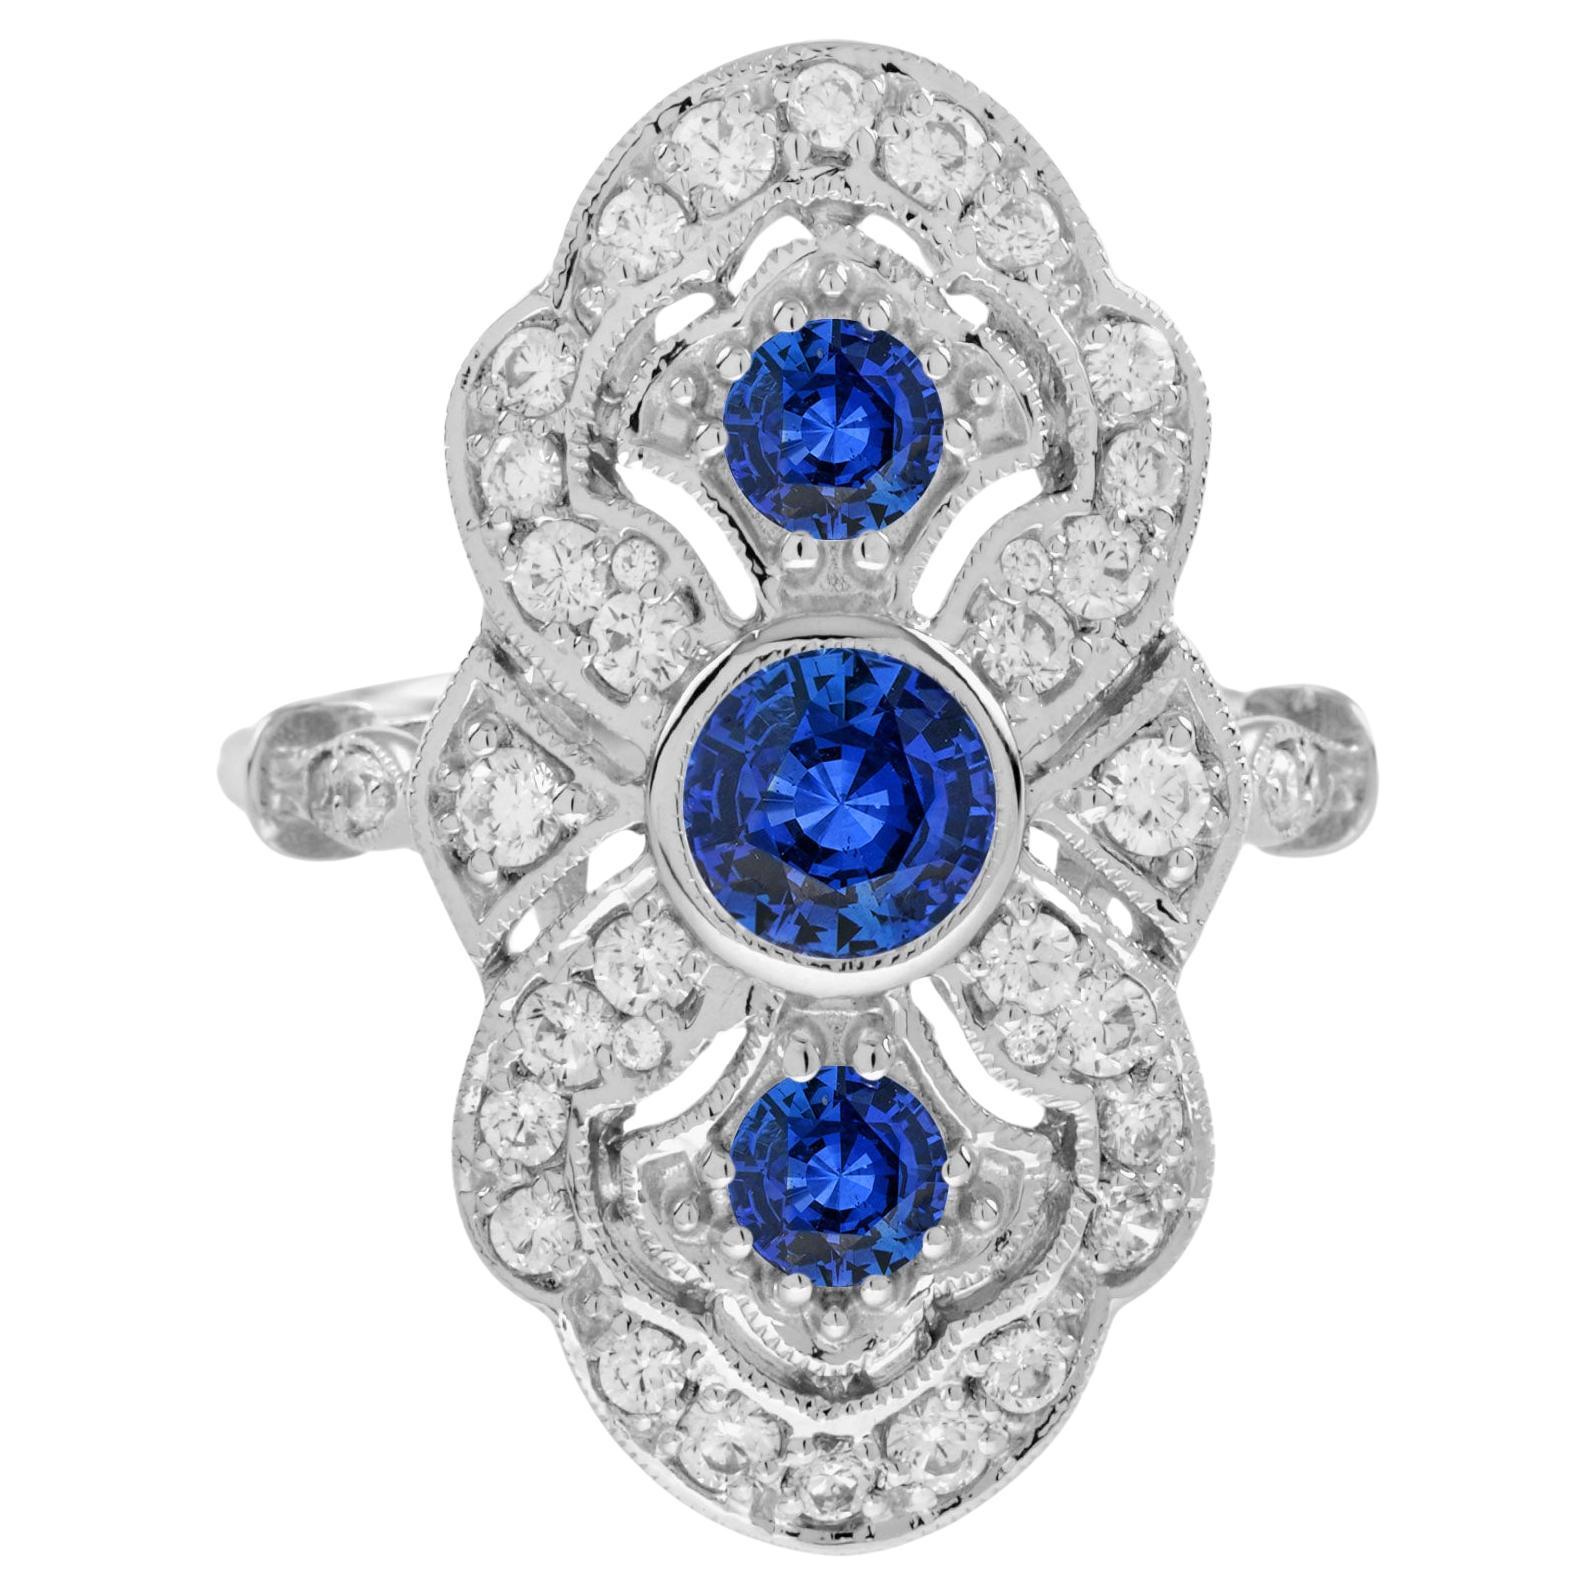 For Sale:  Ceylon Sapphire Diamond Art Deco Style Three Stone Dinner Ring in 18K White Gold